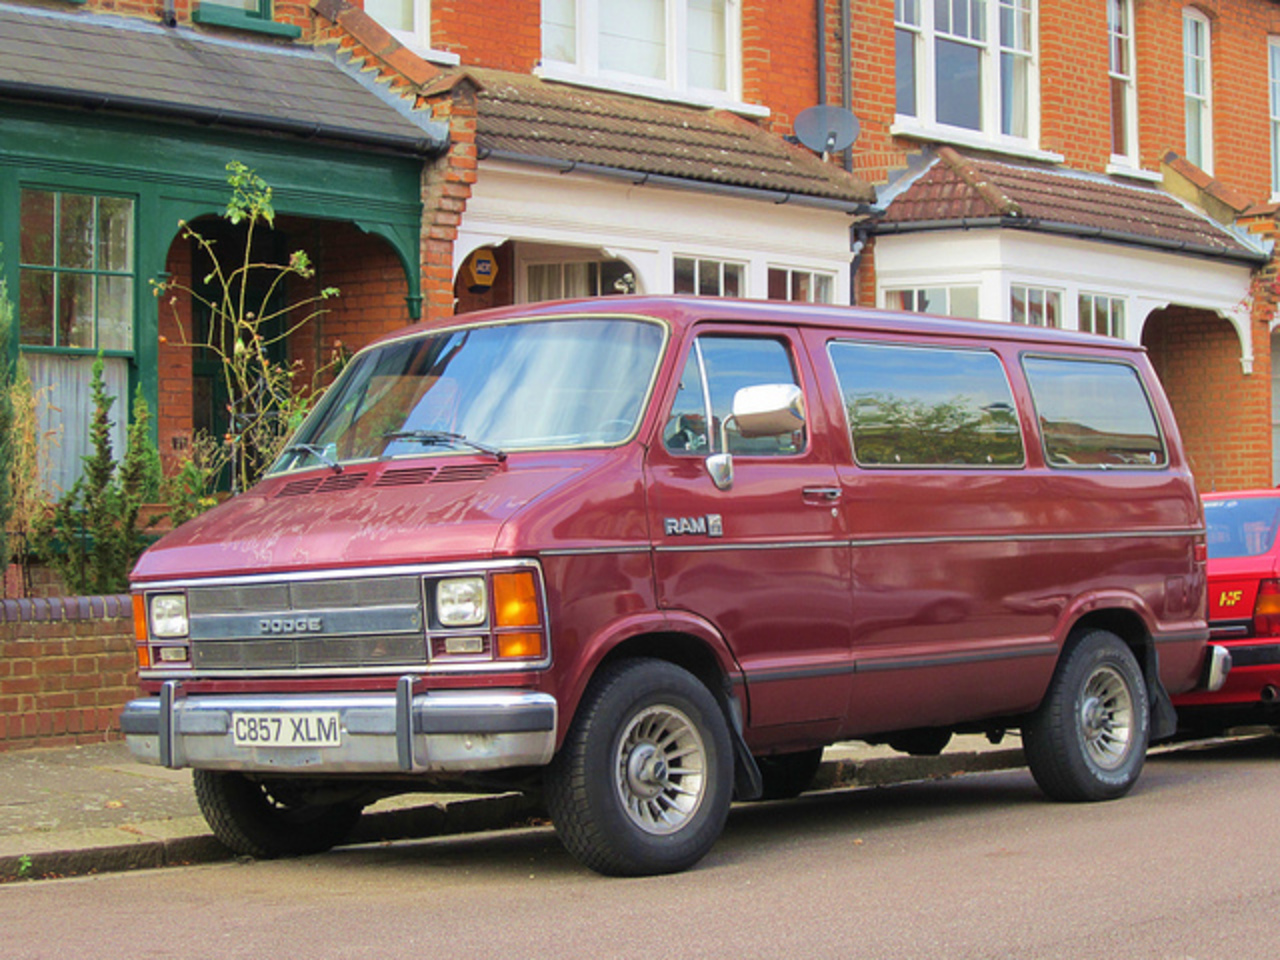 1986 Dodge Ram 5.2 V8 SWB Van. | Flickr - Photo Sharing!